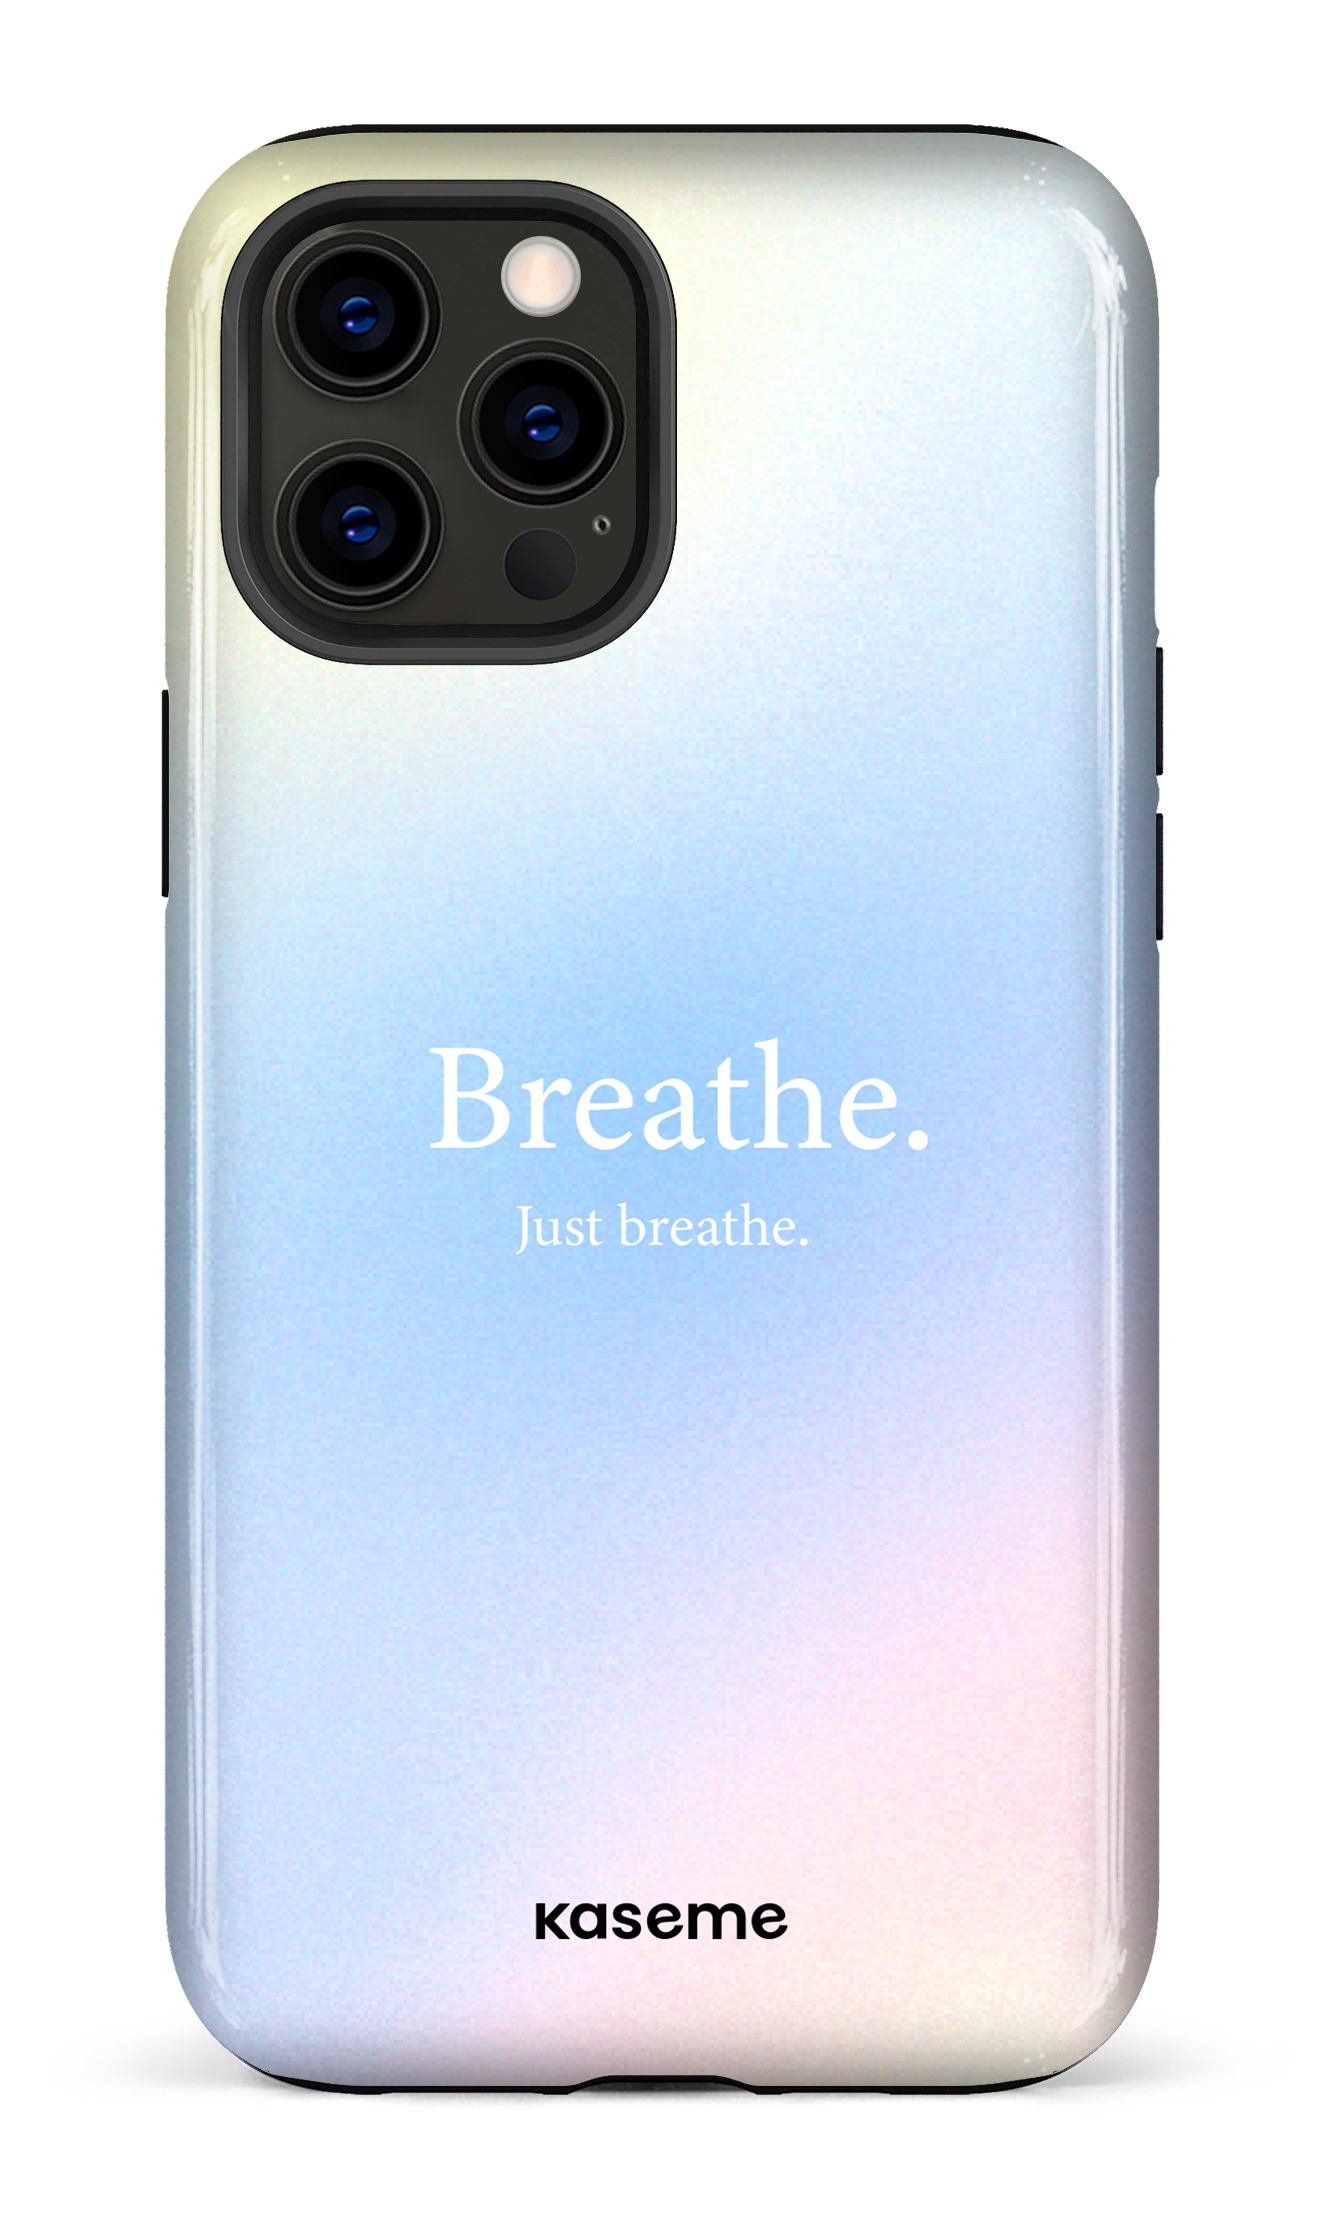 Just breathe blue - iPhone 12 Pro Max